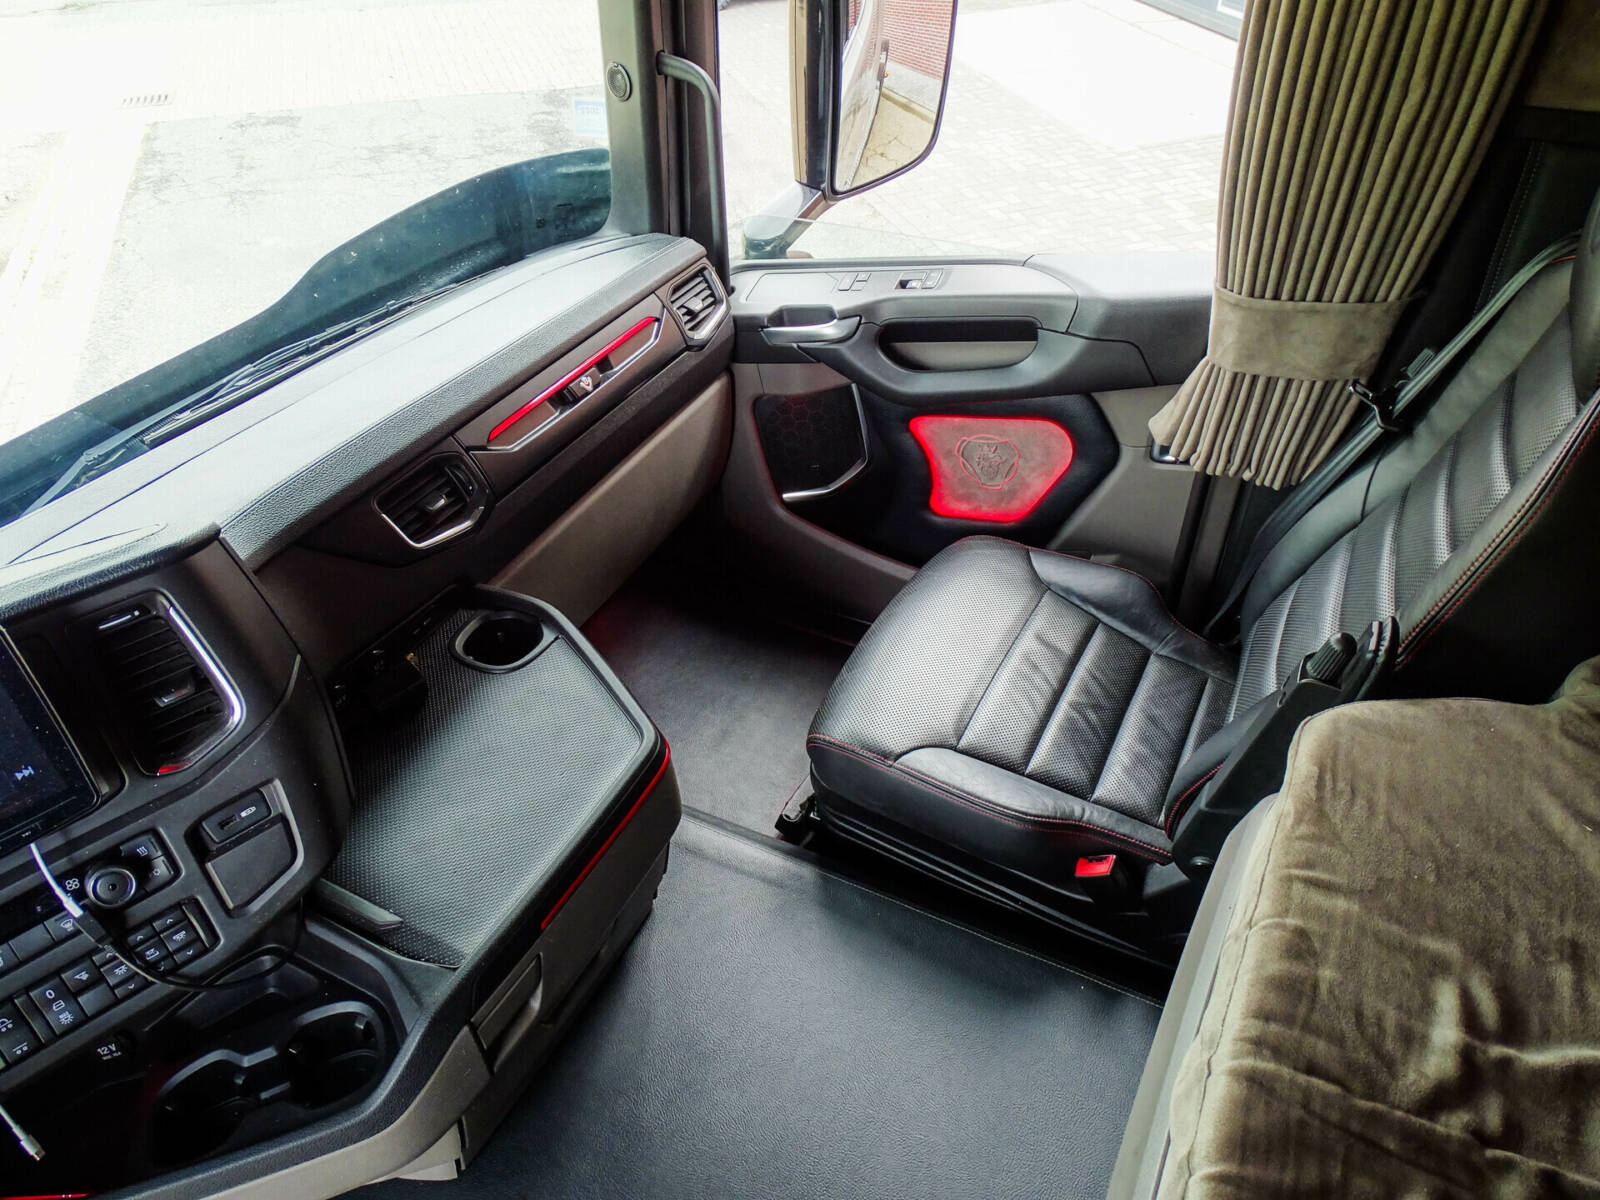 Scania R650 interieur